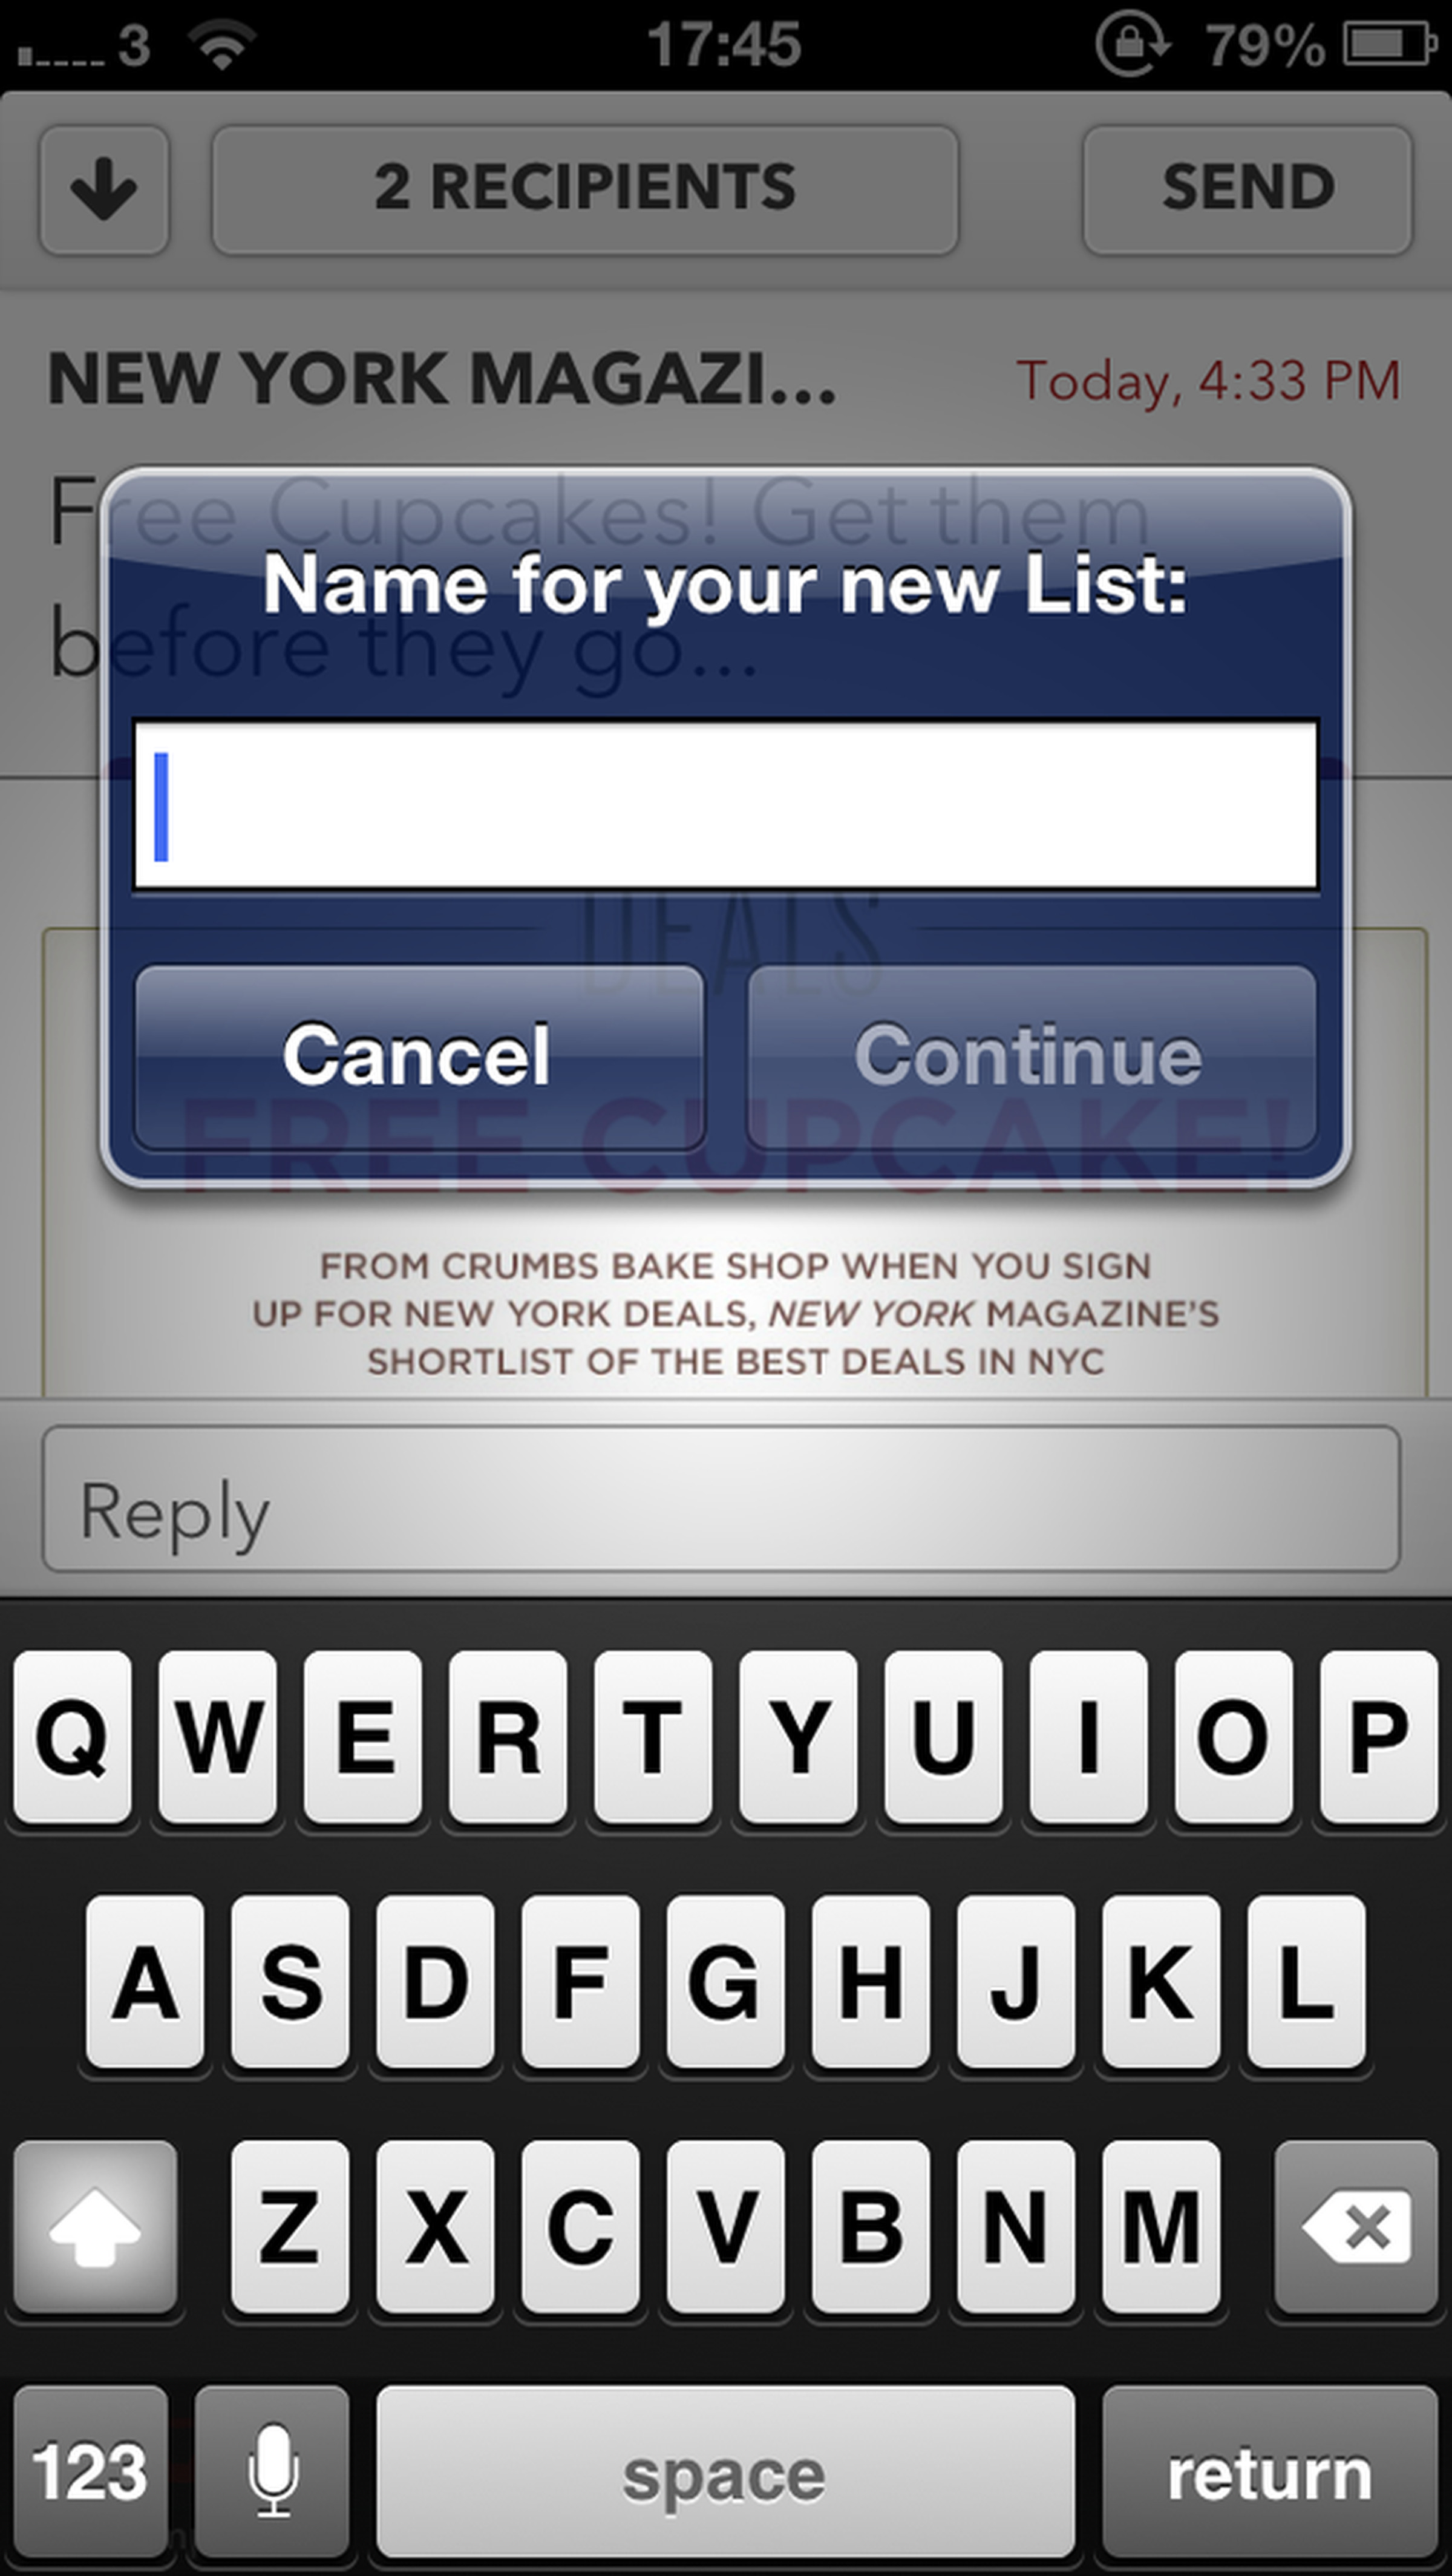 Mail Pilot for iOS screenshots